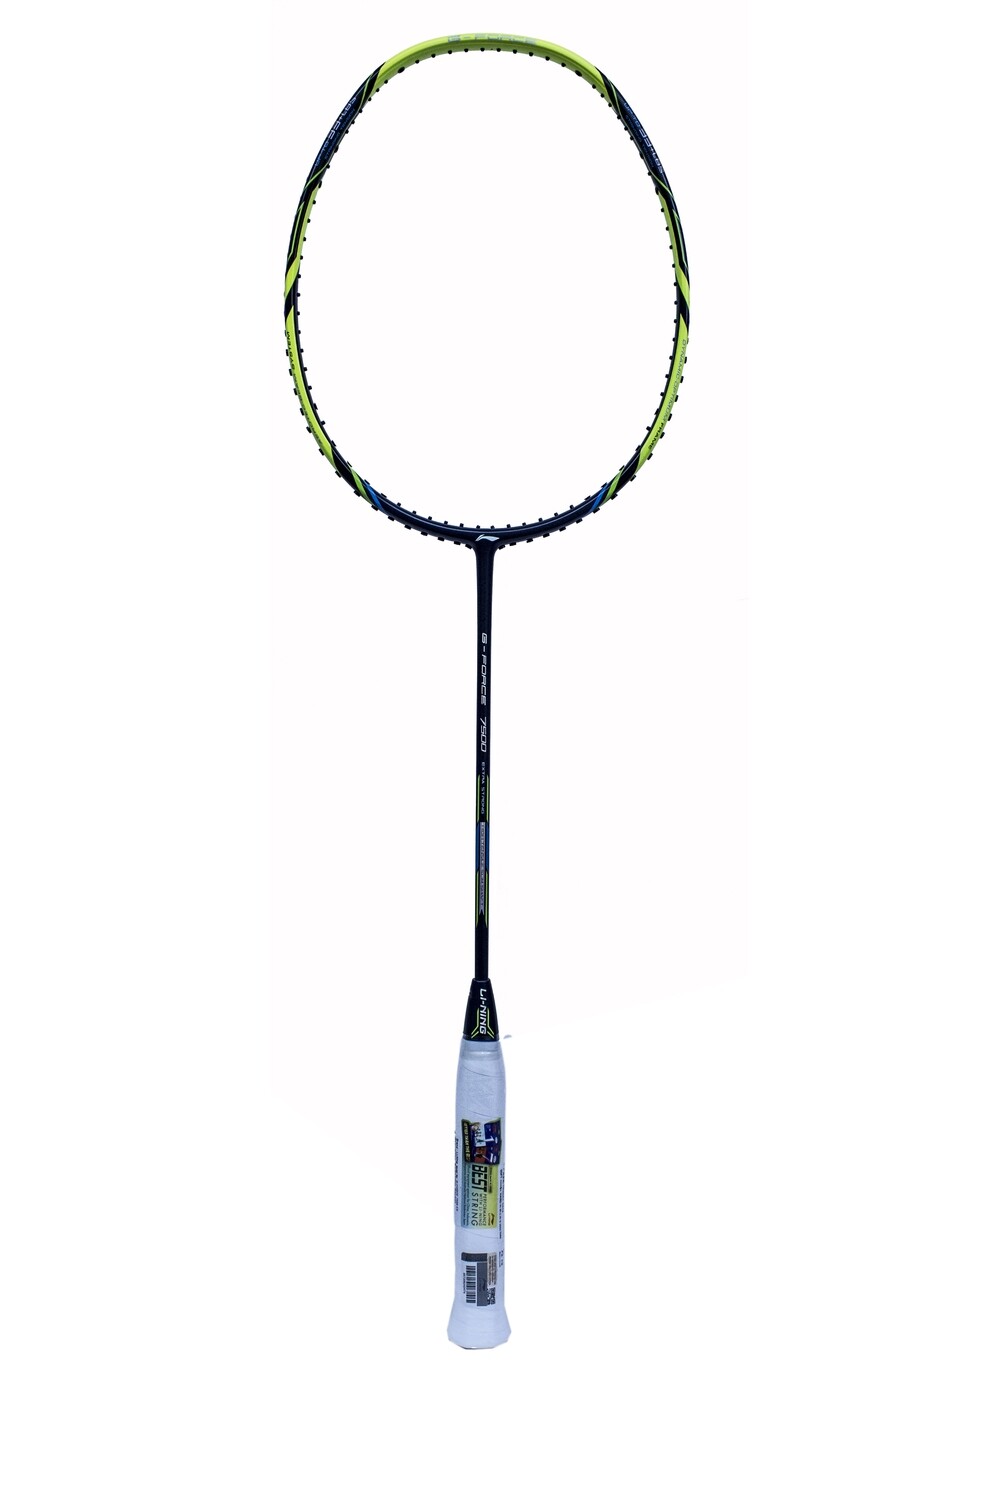 LI-NING G-Force 7500 Badminton Racquet -